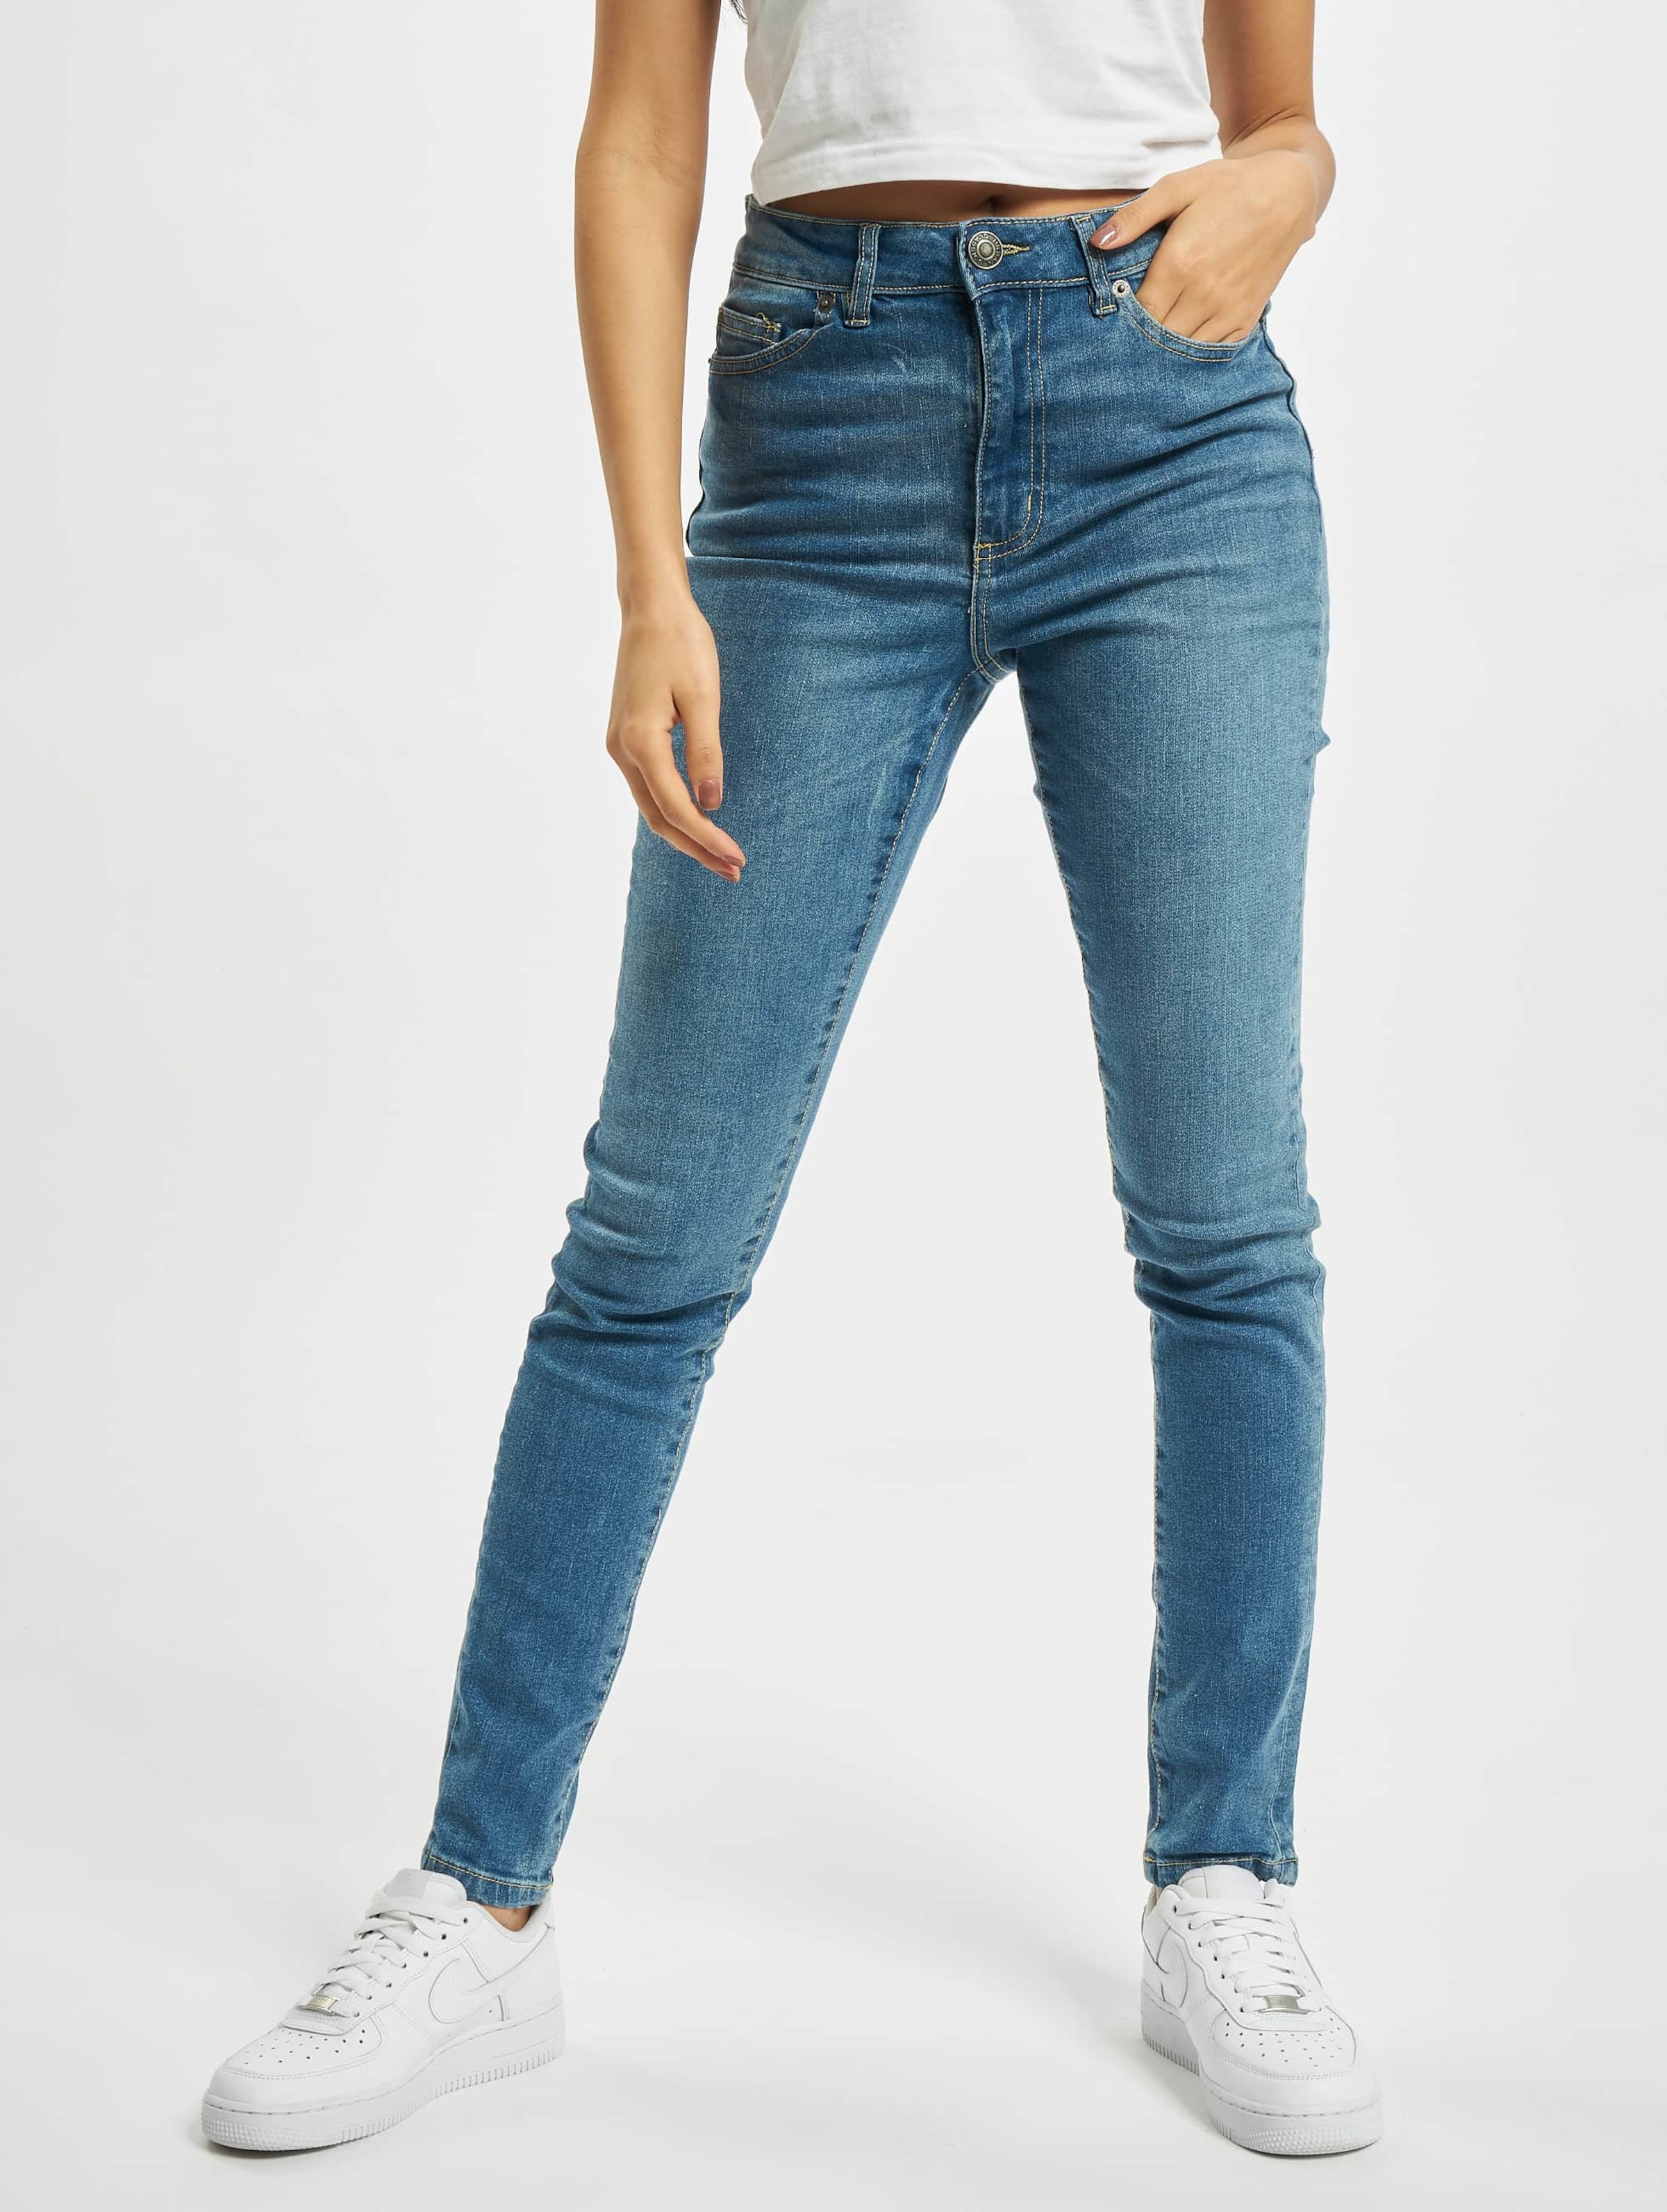 Urban Classics Ladies High Waist Slim Jeans product